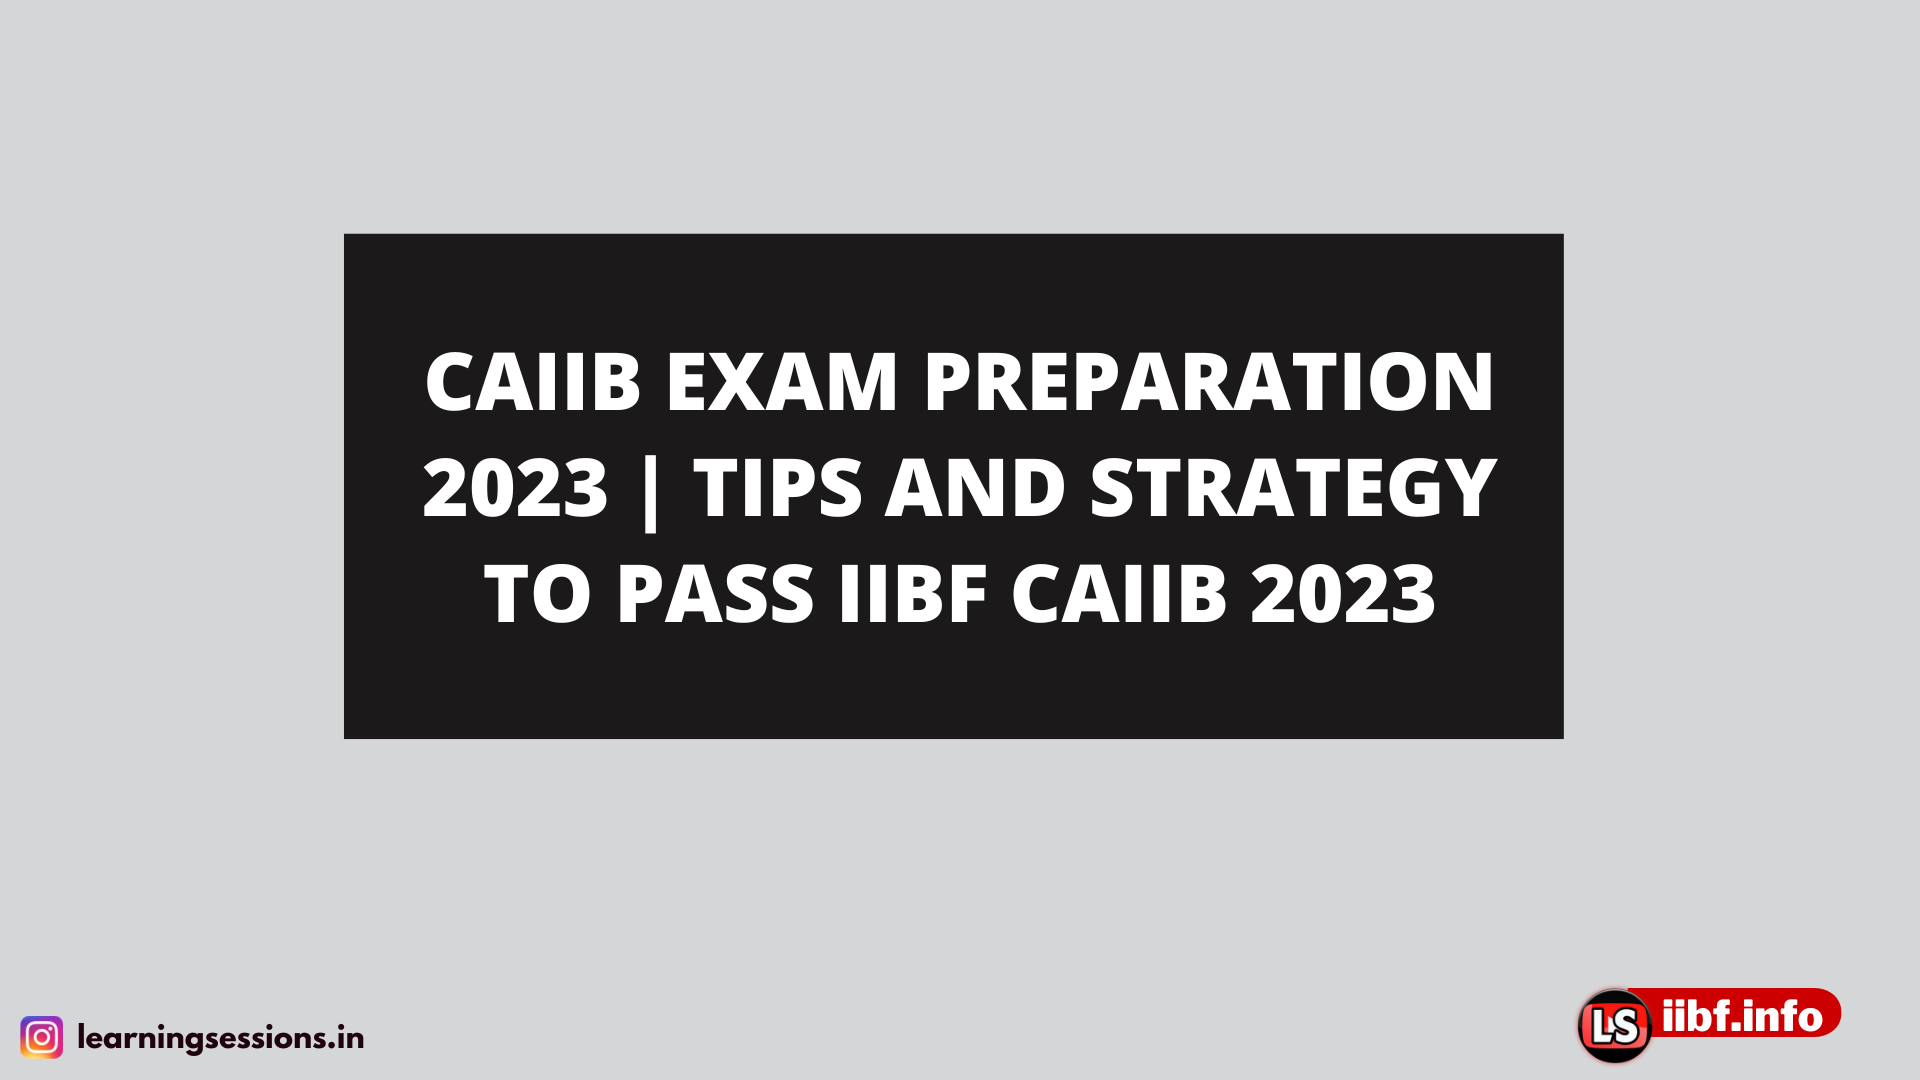 CAIIB EXAM PREPARATION 2022 | TIPS AND STRATEGY TO PASS IIBF CAIIB 2022